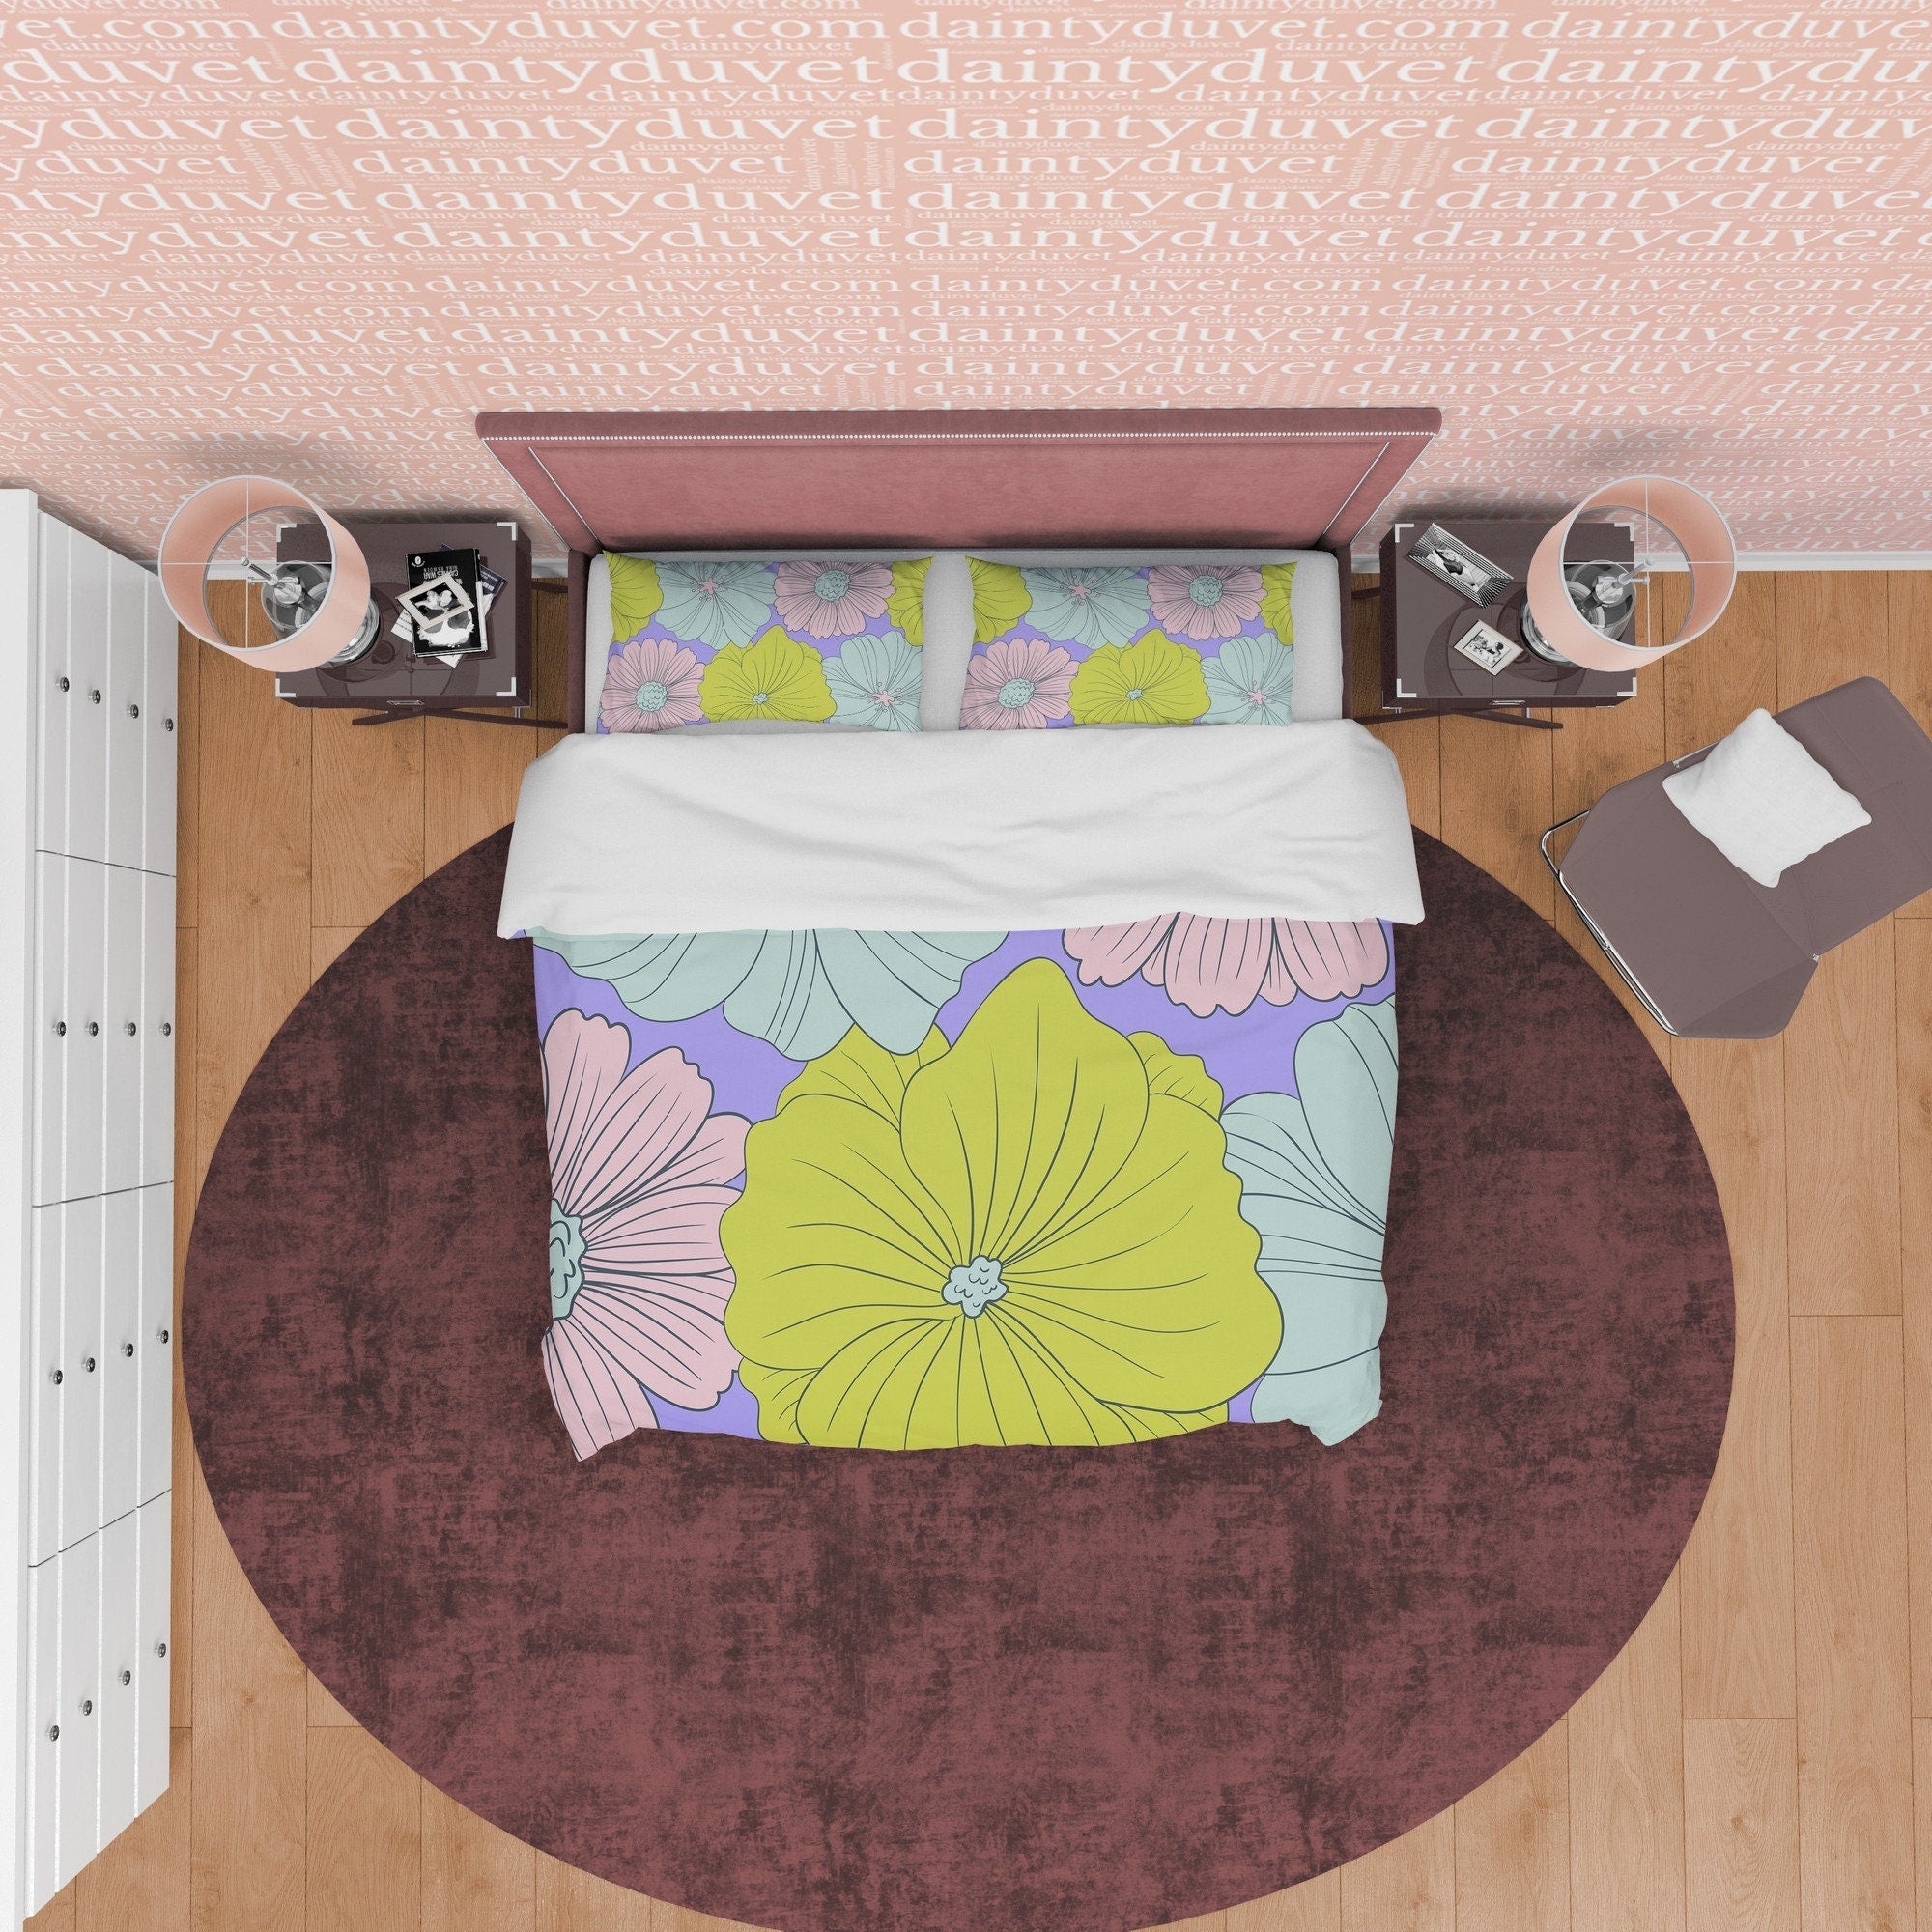 Boho Summer Floral Bedding Colorful Duvet Cover Bohemian Bedspread, Flower Quilt Cover, Aesthetic Bedspread, Bright Colors Unique Room Decor